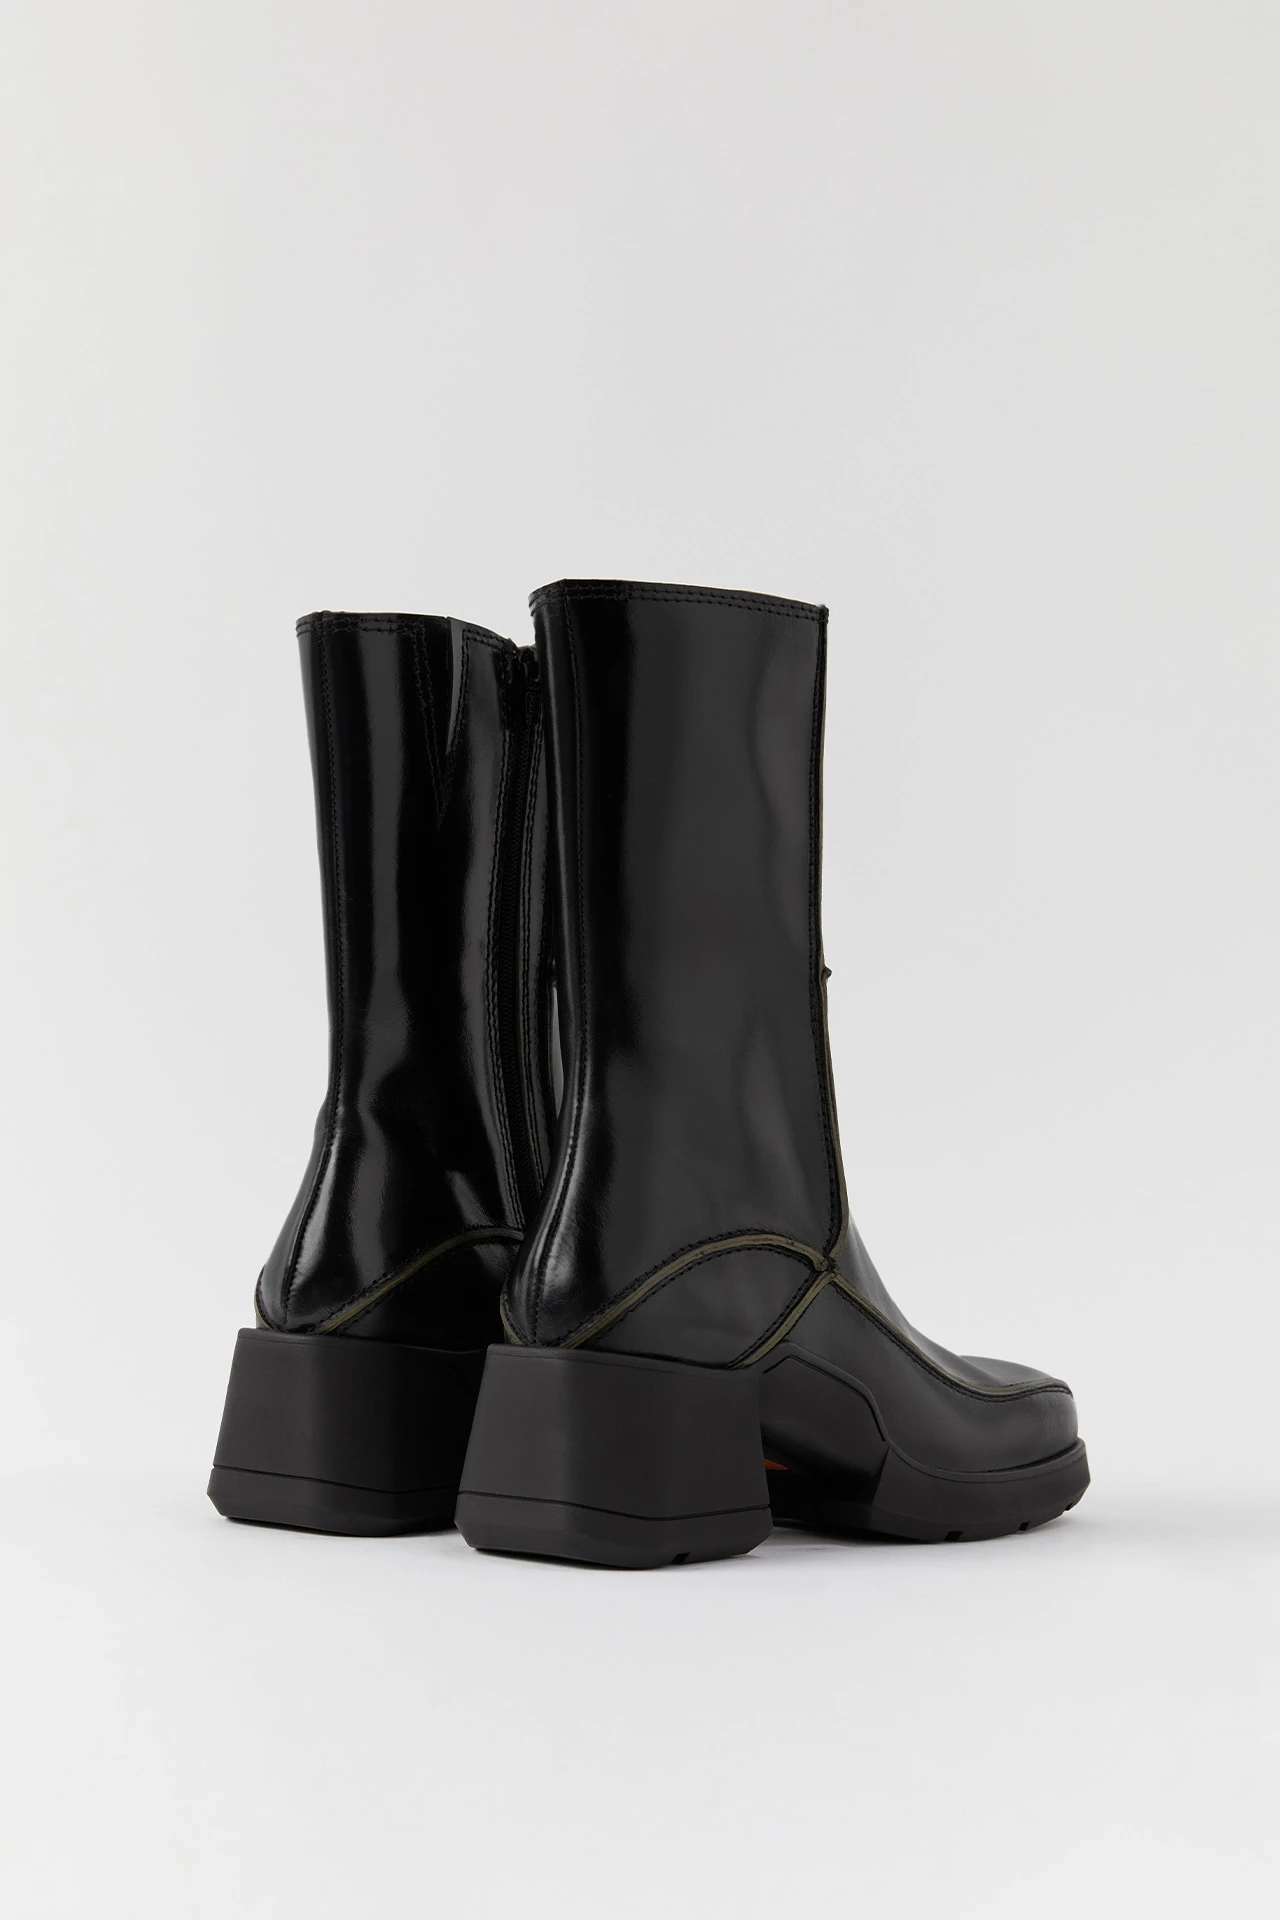 e8-meiko-black-boots-02